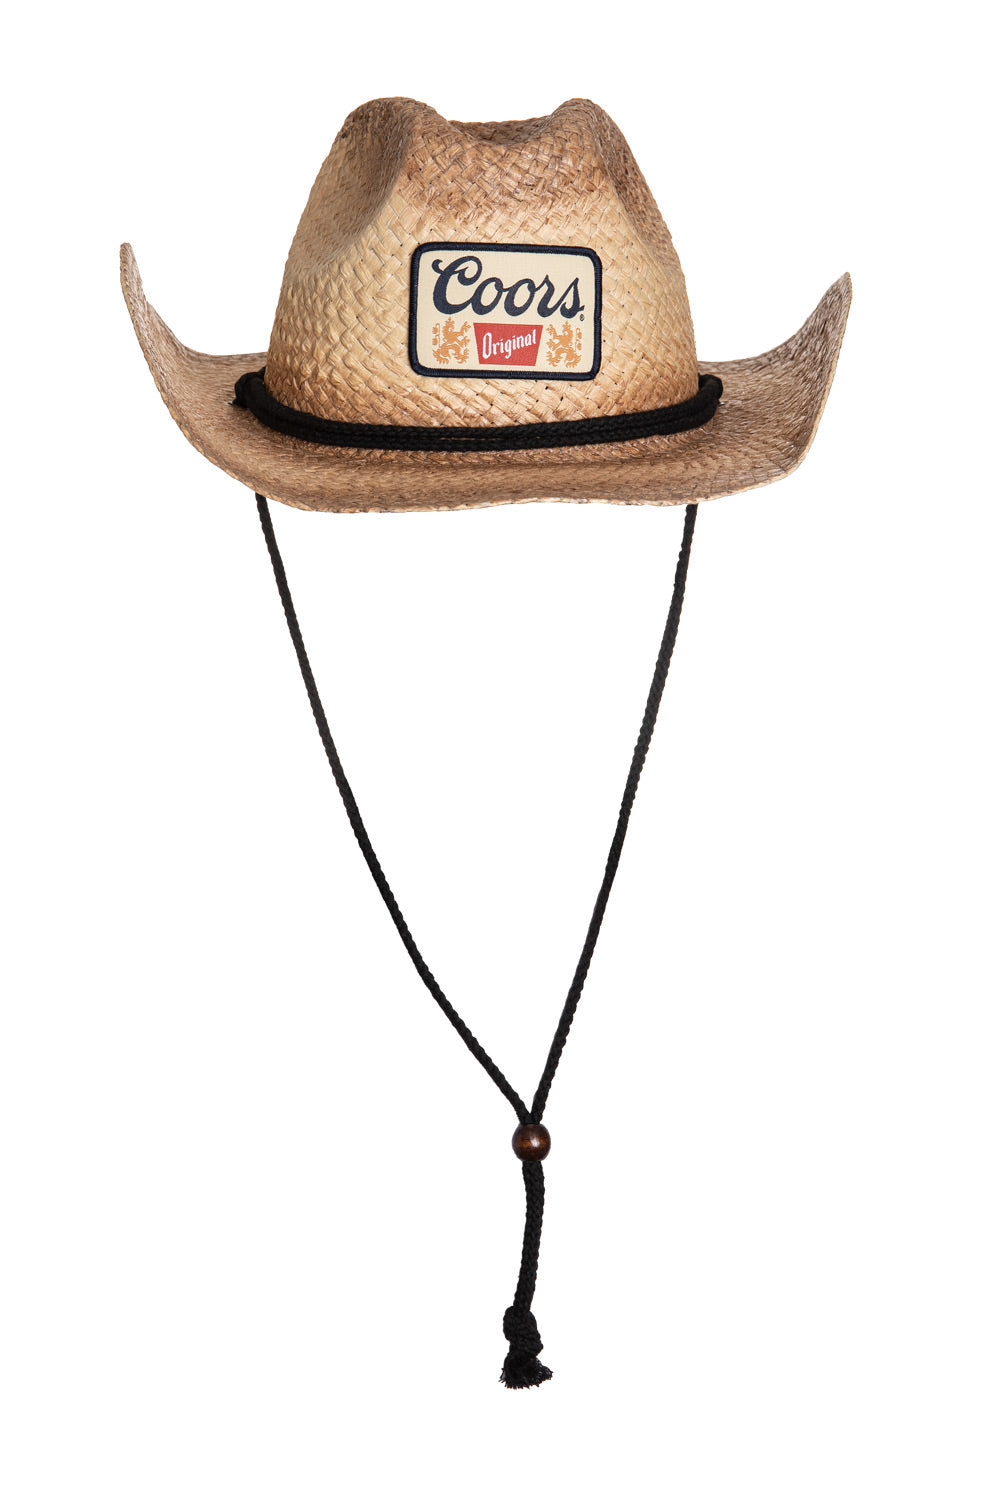 Coors Original Straw Cowboy Hat